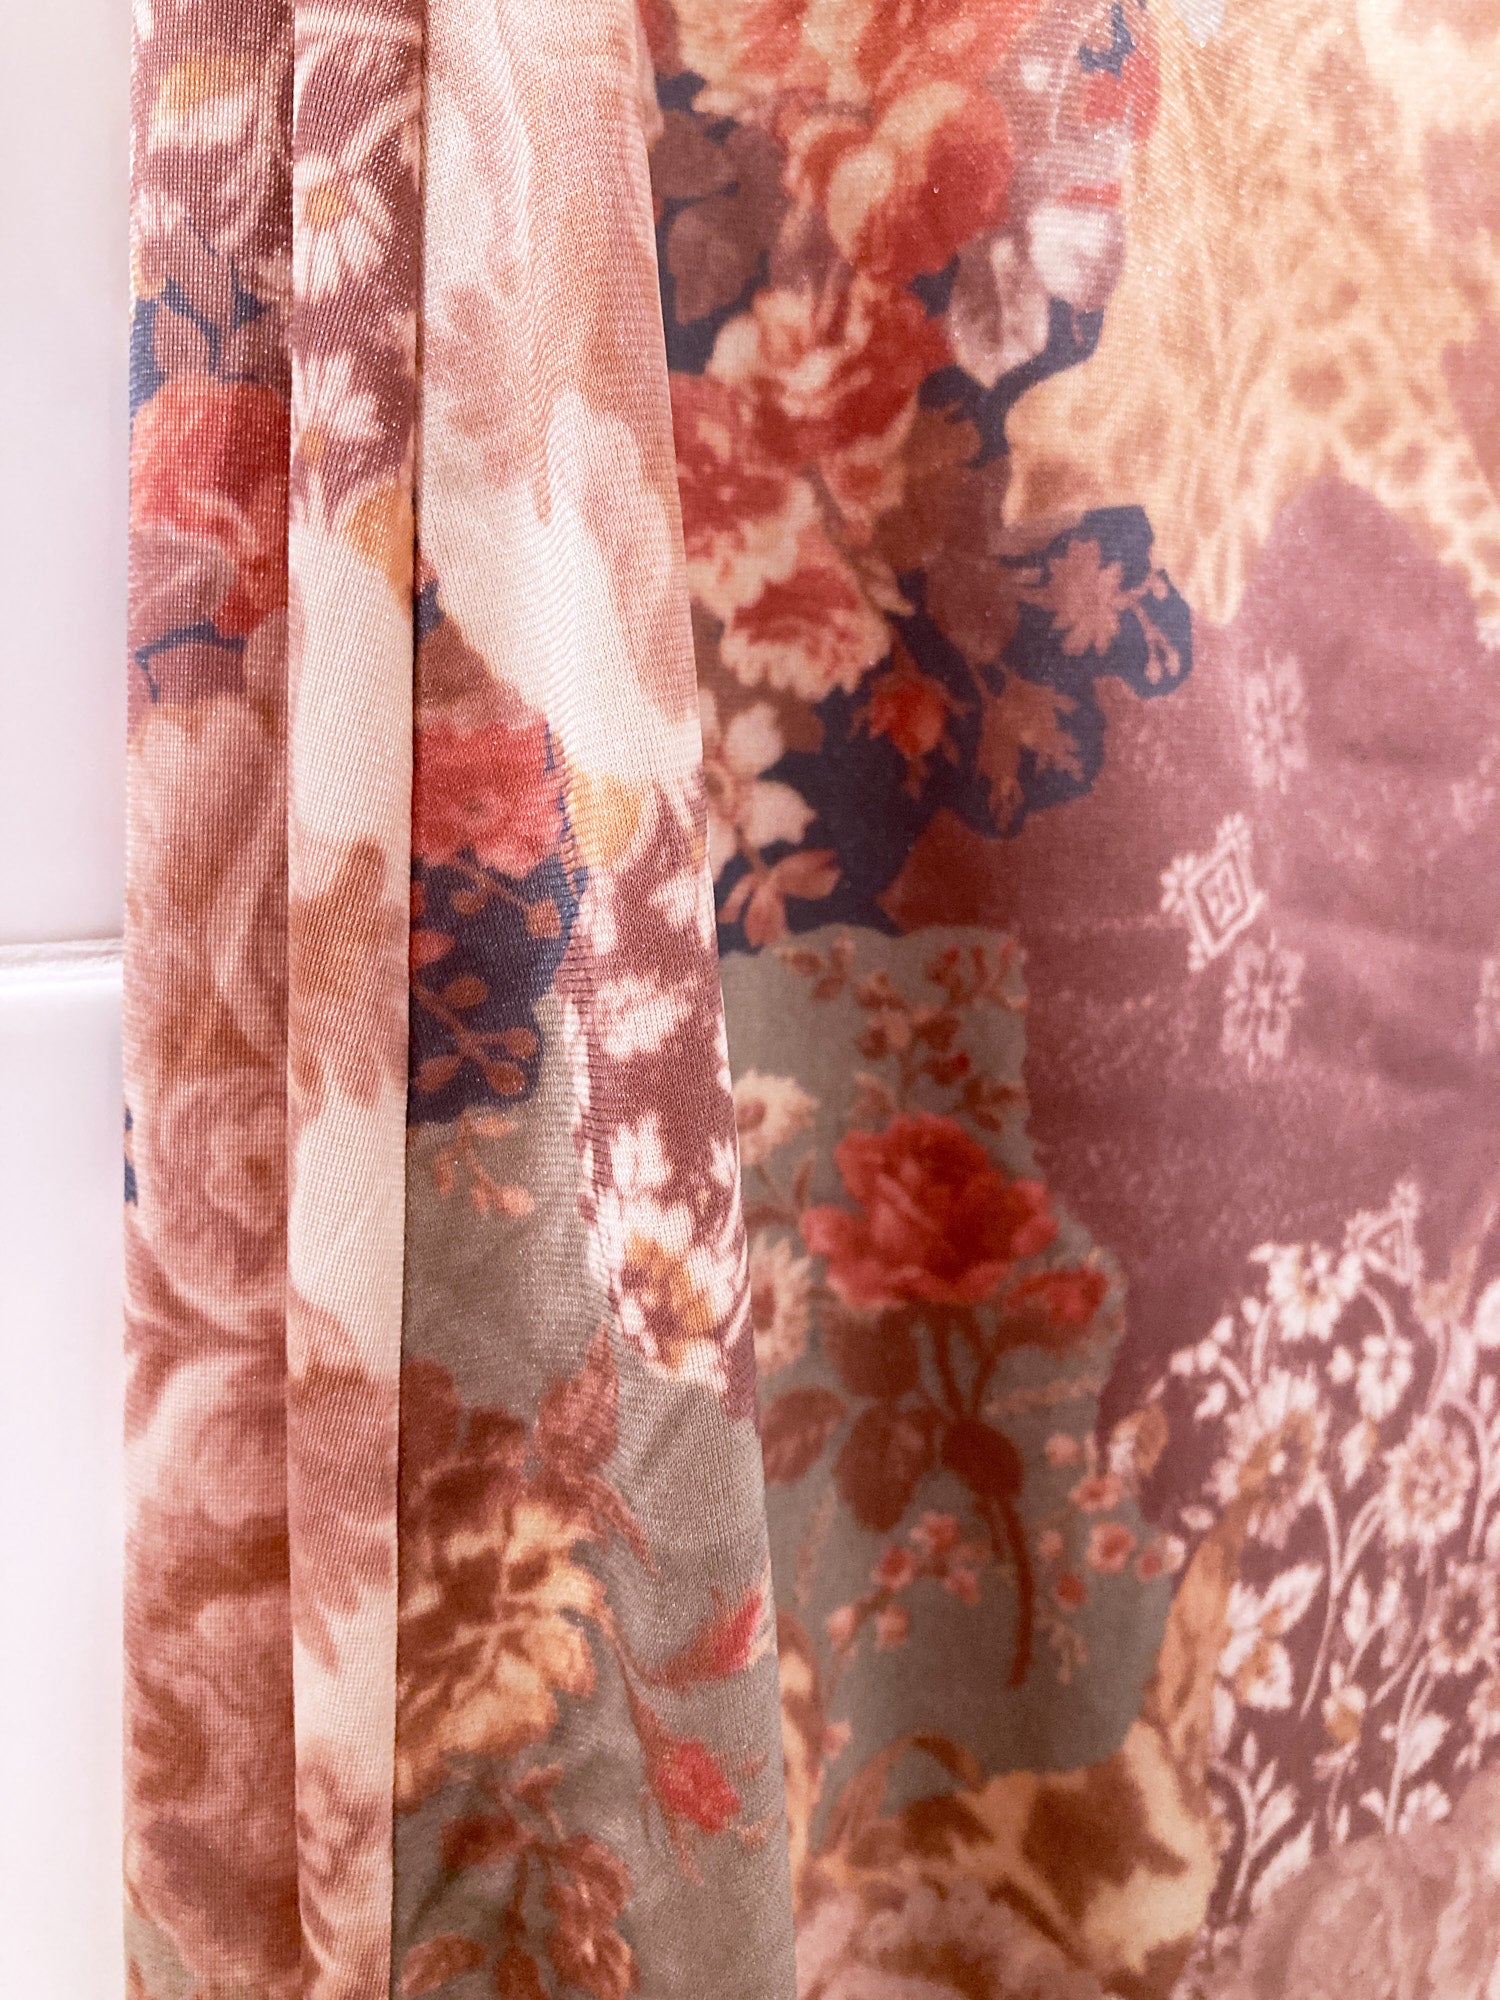 Jean Colonna multicolour floral print slip dress with adjustable spaghetti strap